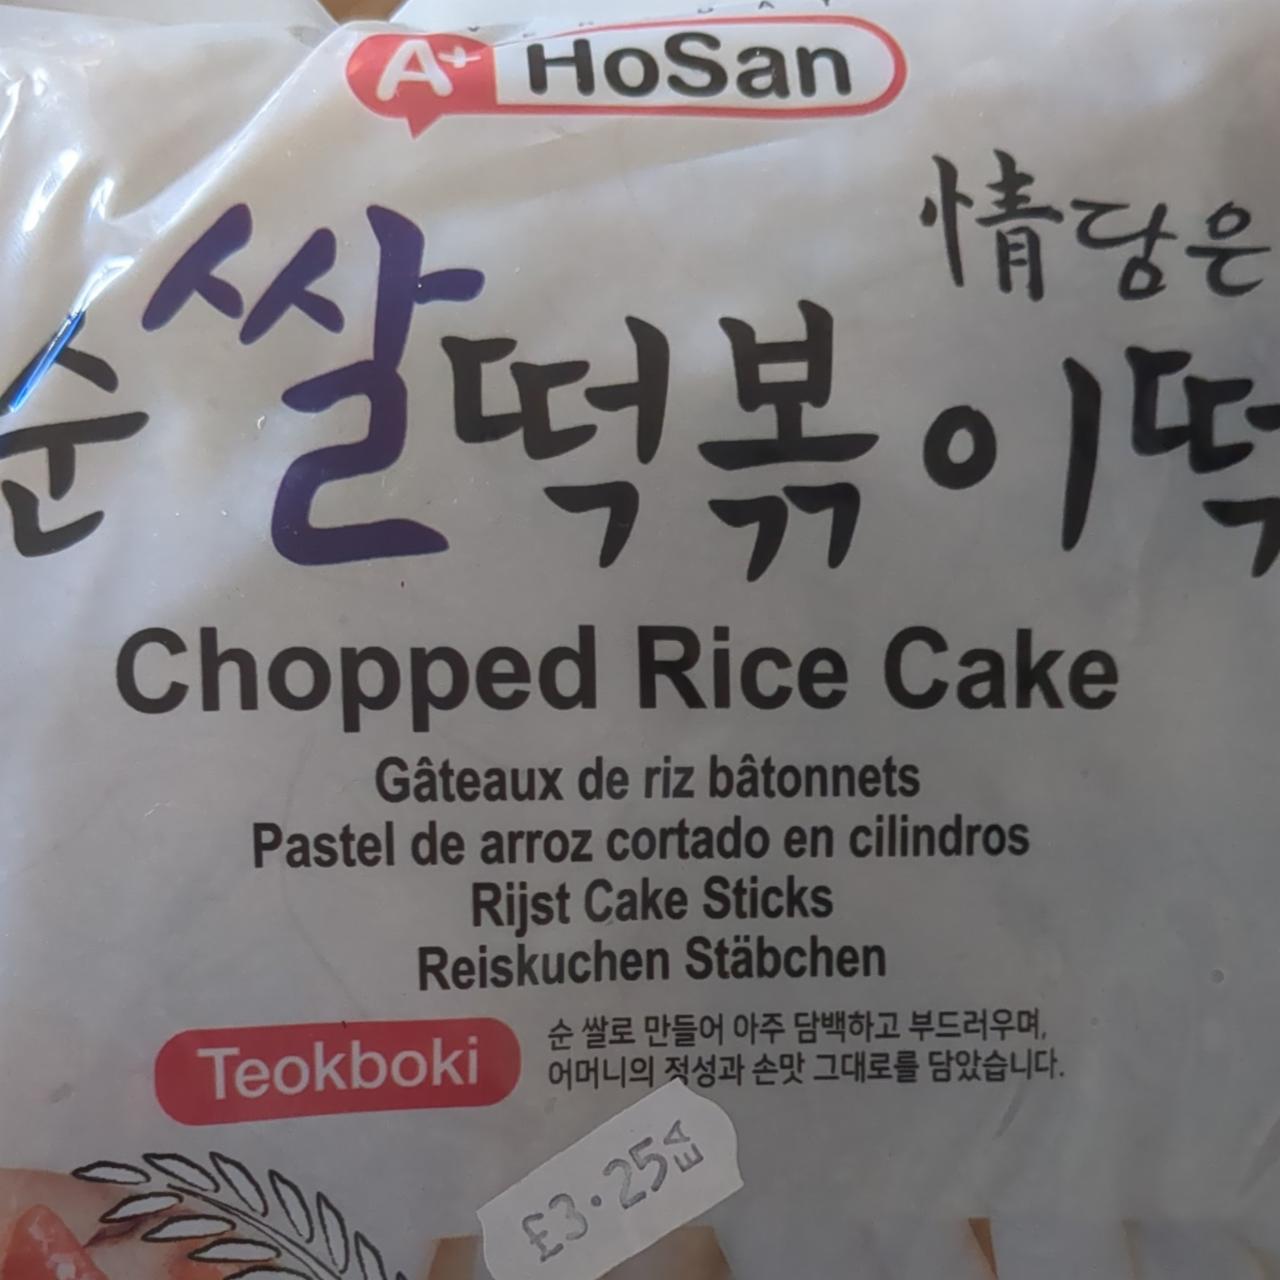 Fotografie - Chopped Rice Cake Teokboki A+Hosan